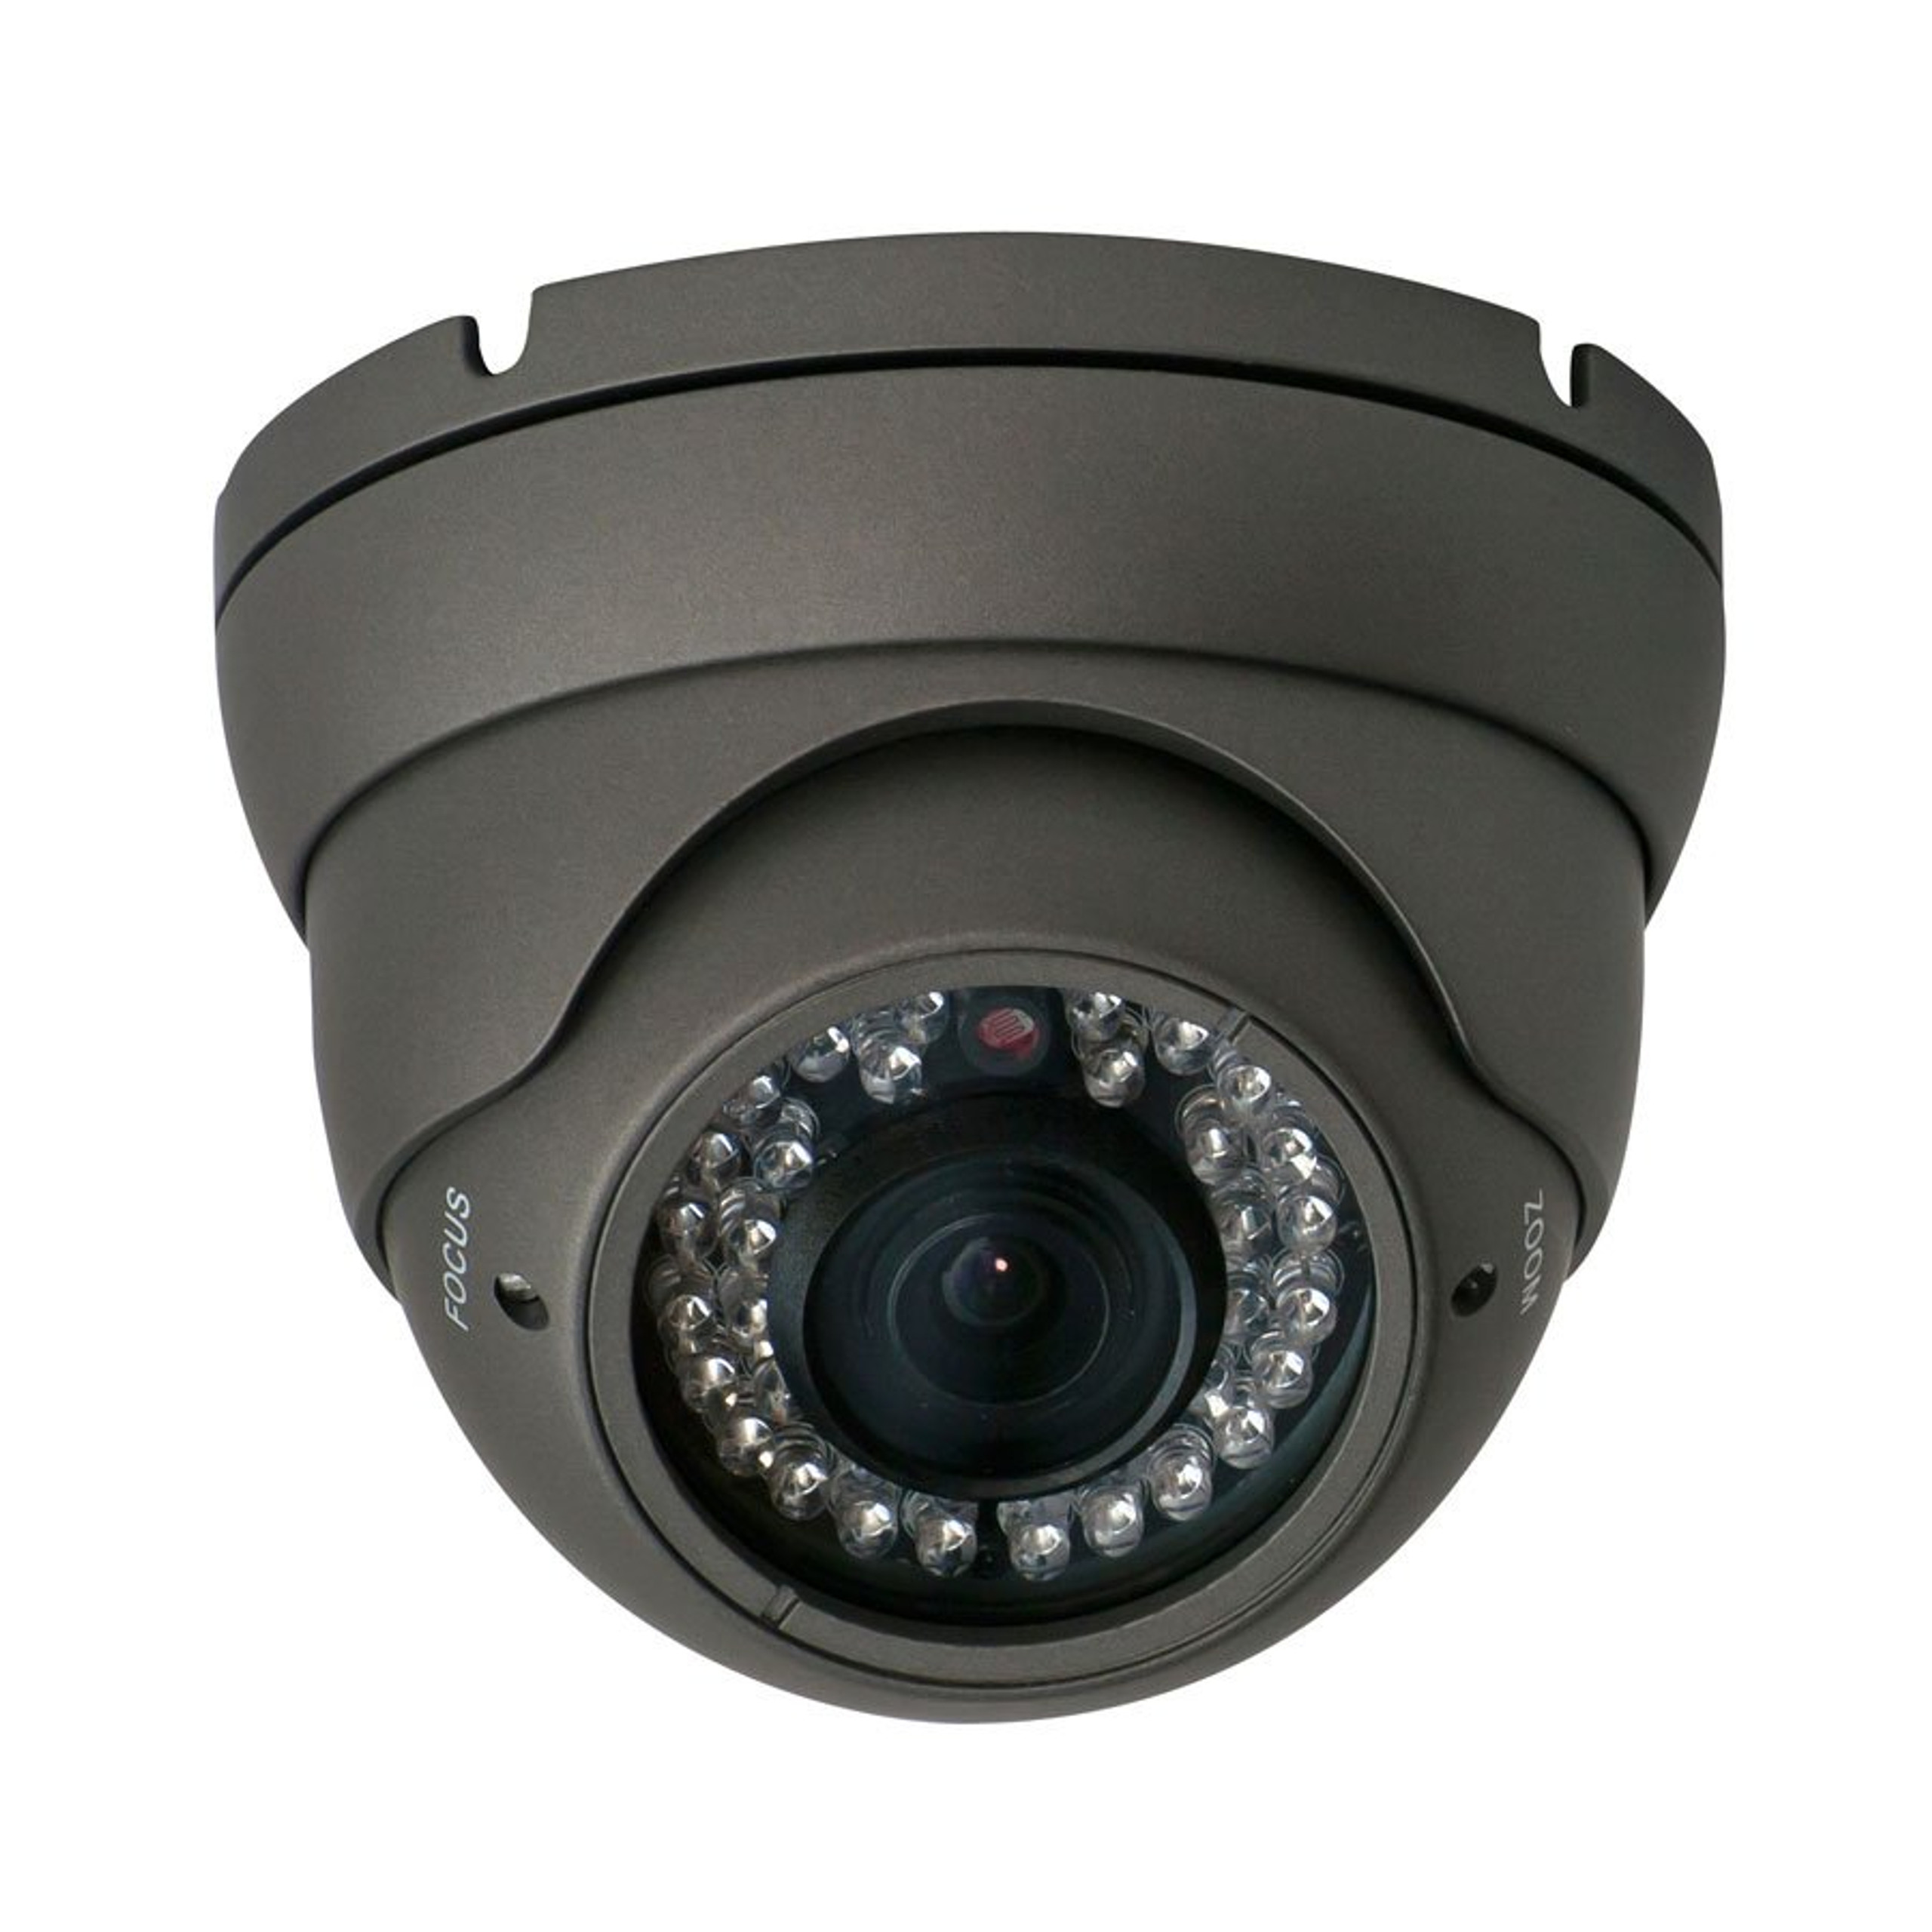 Speco VLEDT1HG Outdoor Turret CCTV Security Camera